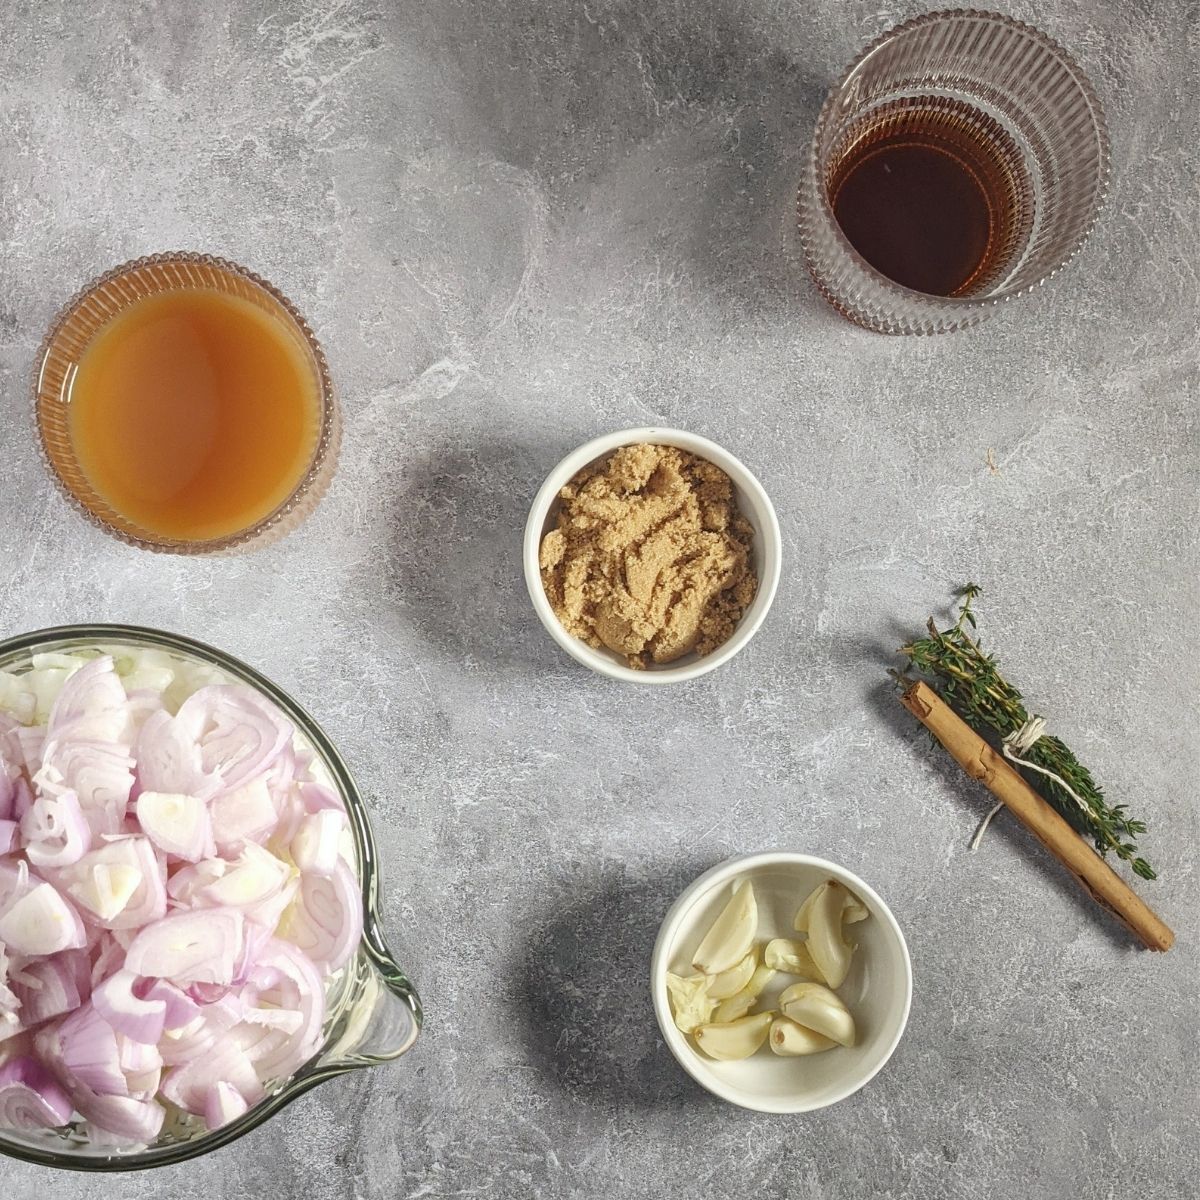 ingredients to make apple cider onion jam